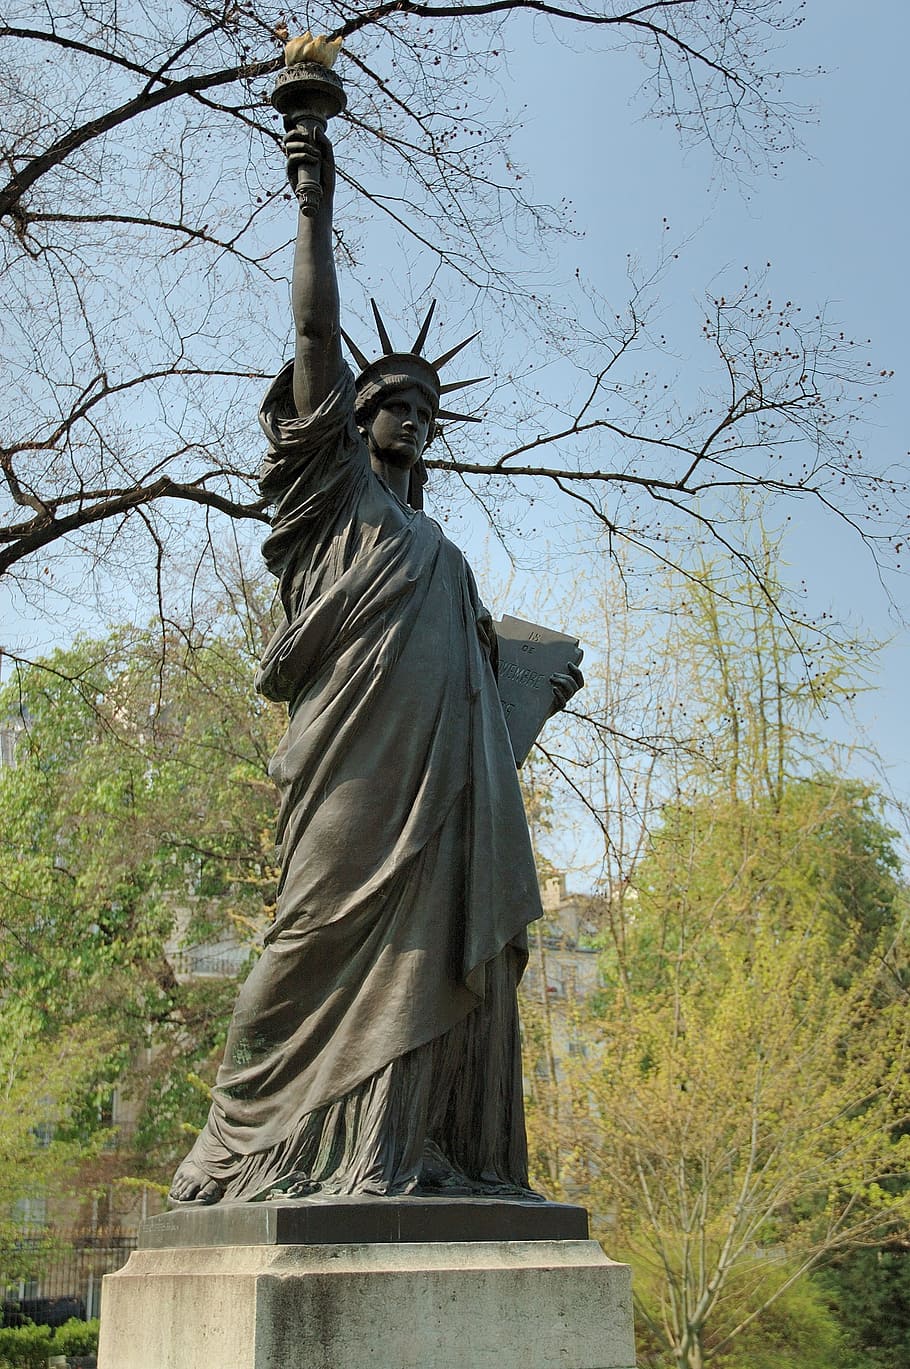 Statue Of Liberty, Luxembourg Gardens, paris, original, bartholdi